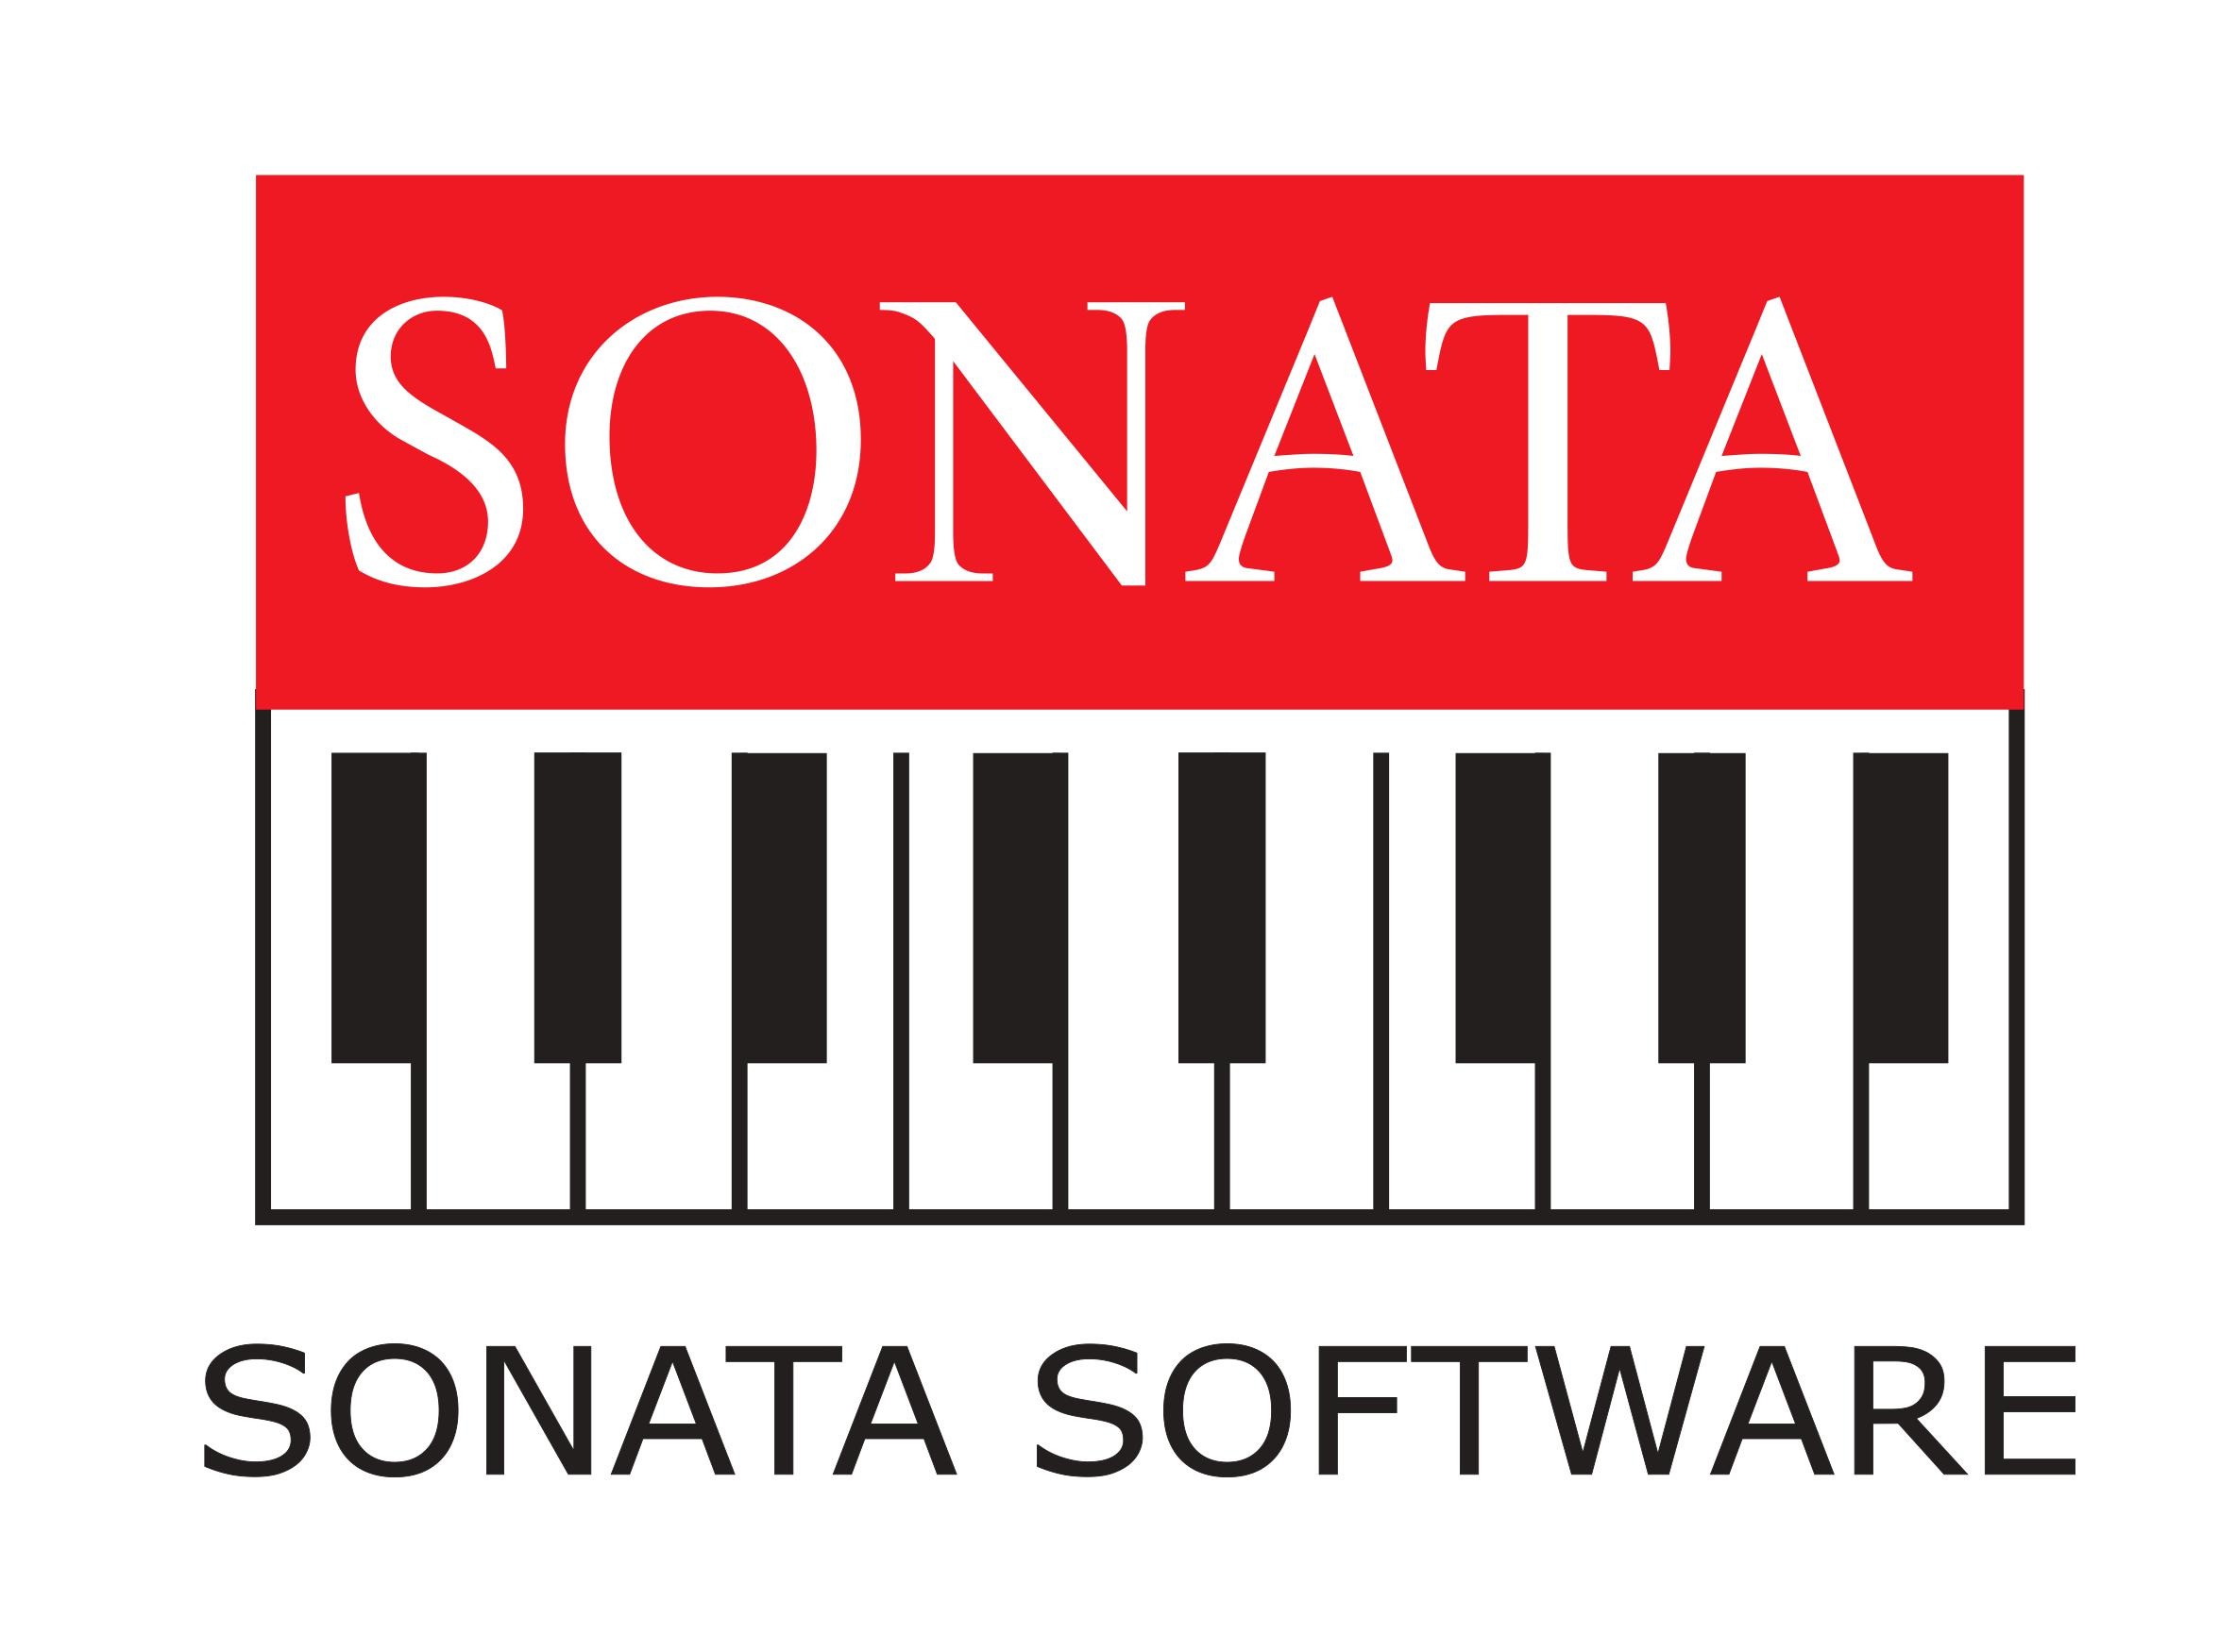 Sonata logo (1)